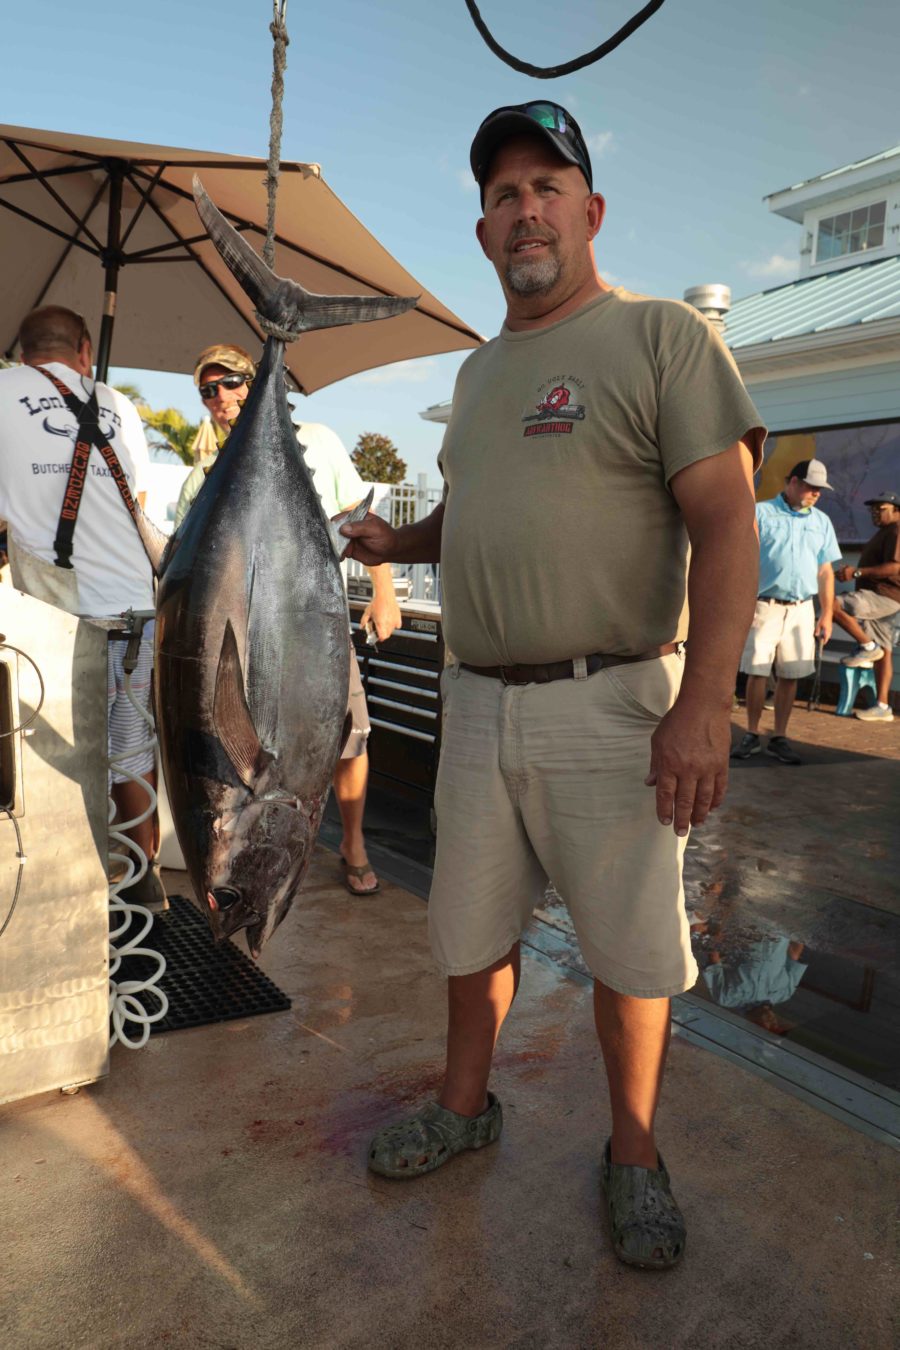 Maryland Longfin Tuna Record Smashed